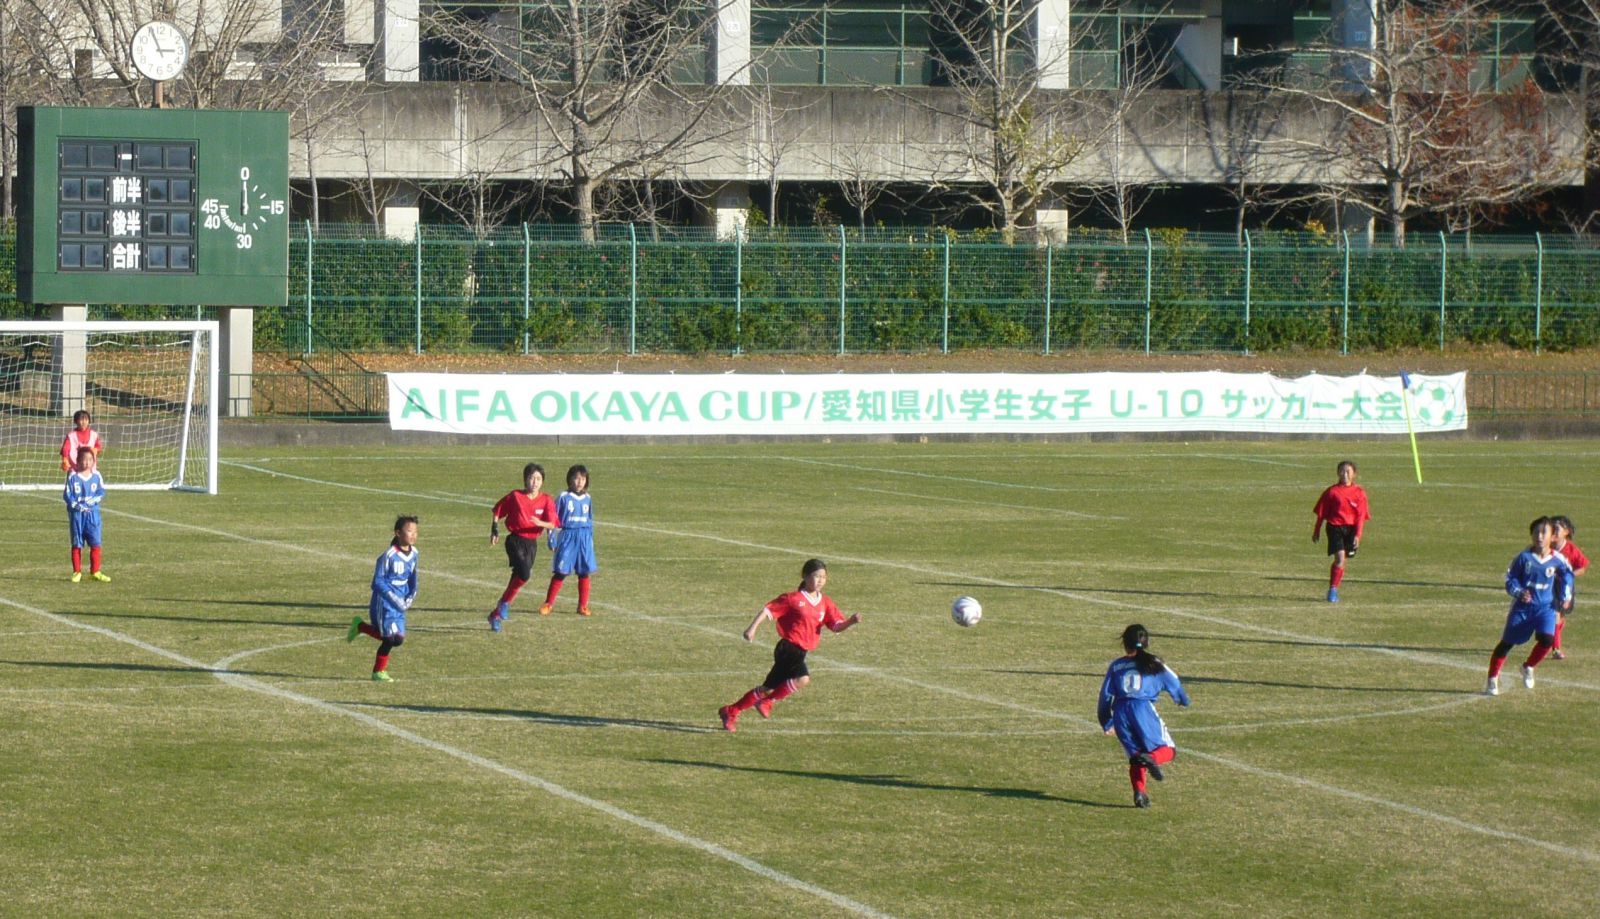 Aifa 19 Okaya Cup 第37回愛知県小学生女子u 10サッカー大会が開催されました 岡谷鋼機株式会社